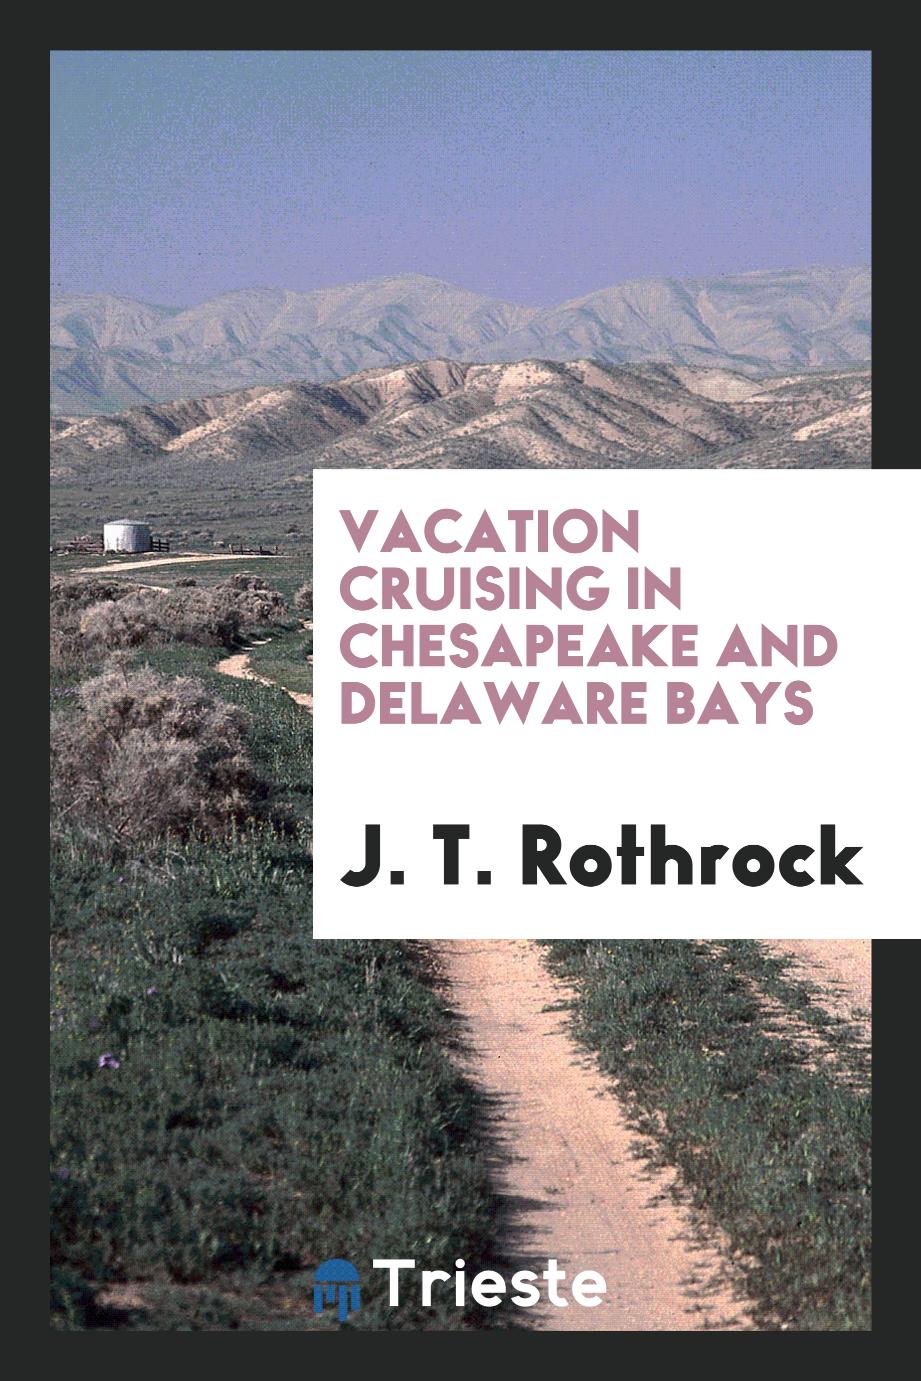 Vacation cruising in Chesapeake and Delaware bays